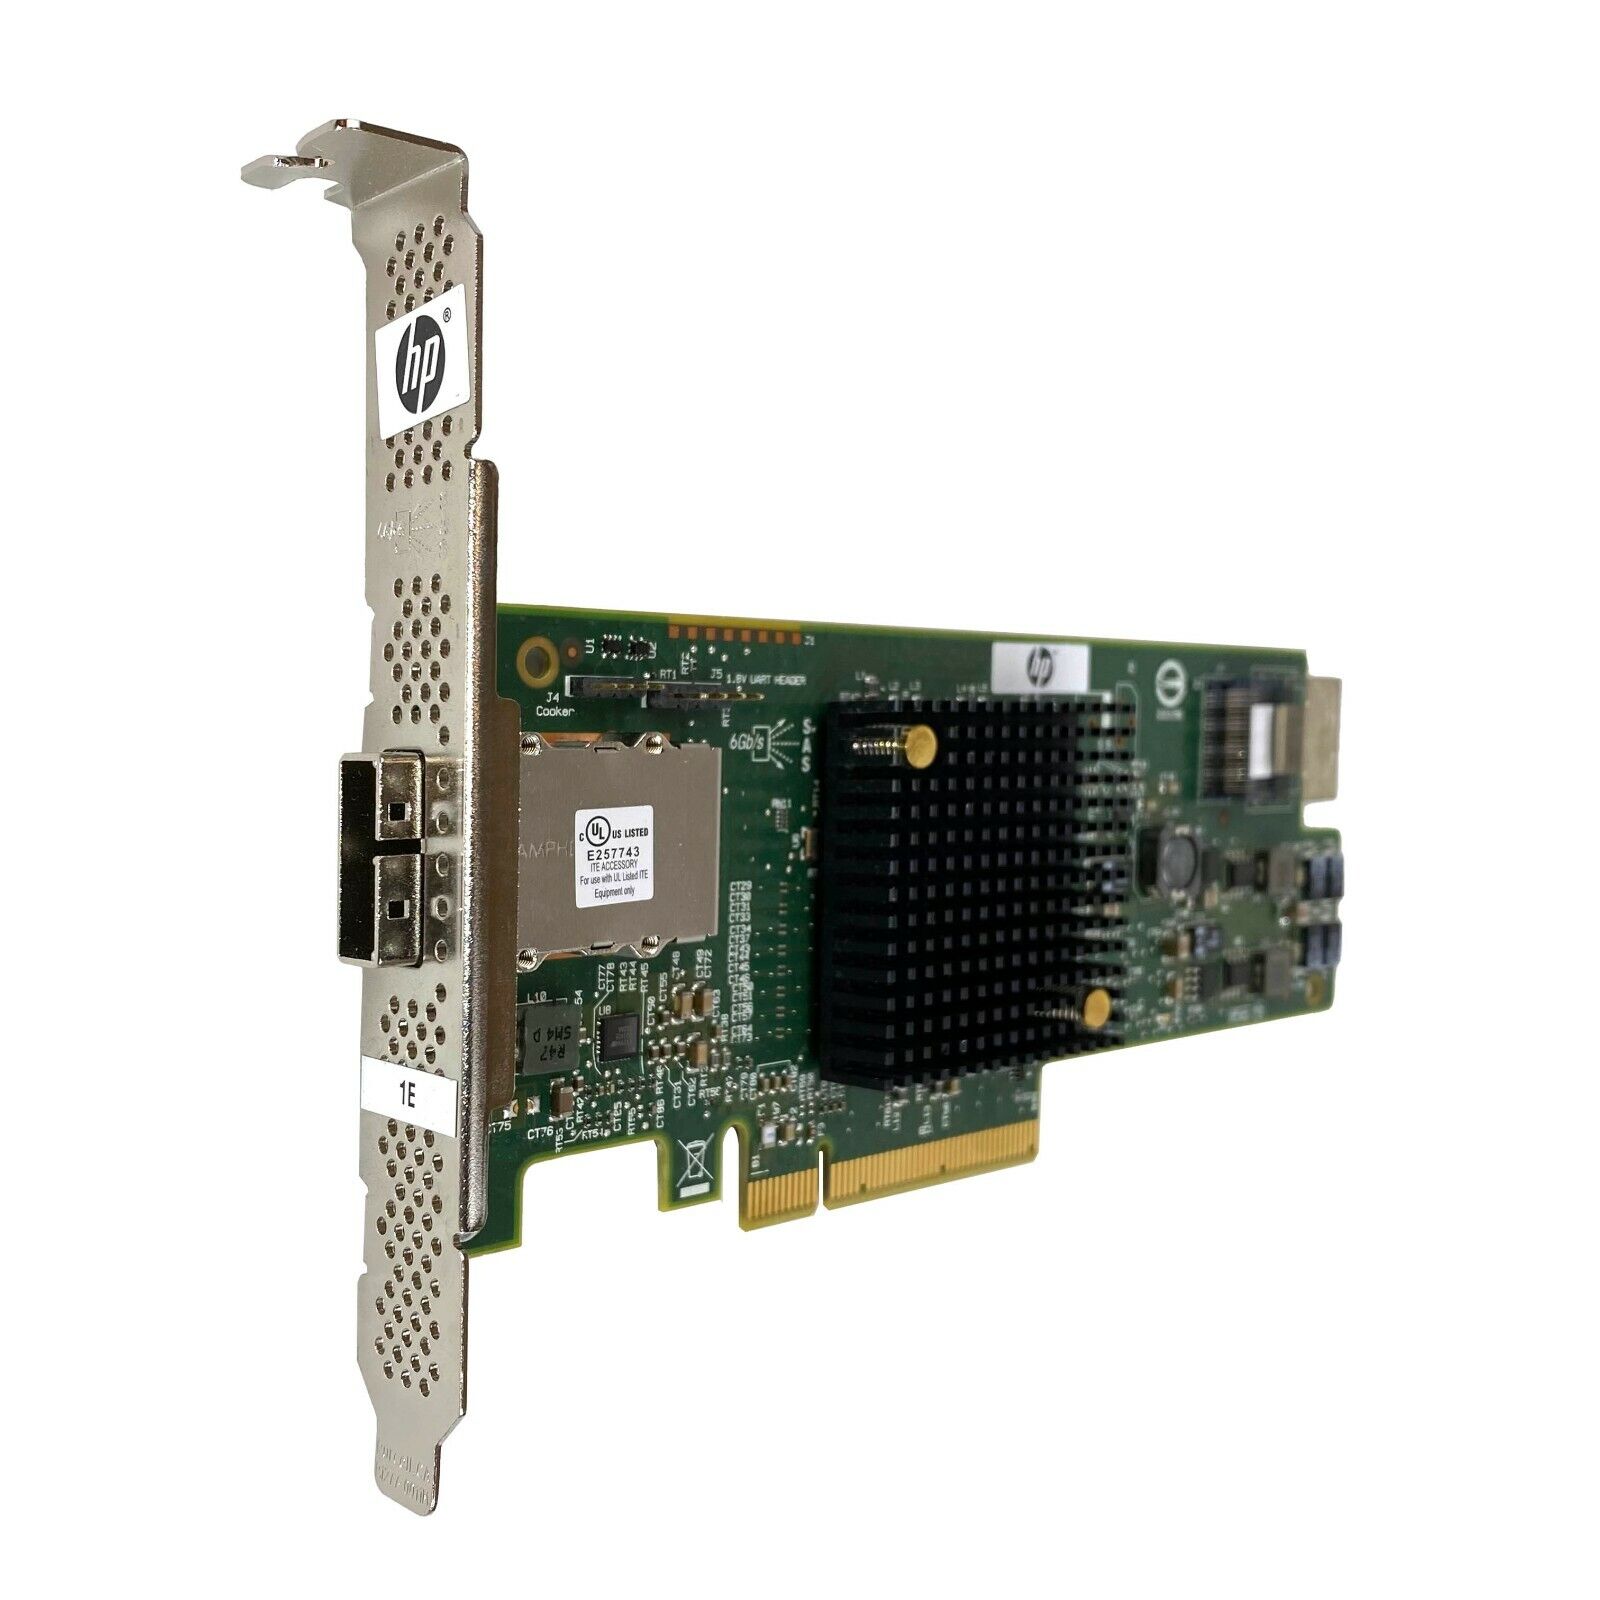 HP LSI 9217-4i4e SAS 6Gb/s RAID storage controller card 792099-001 725504-002